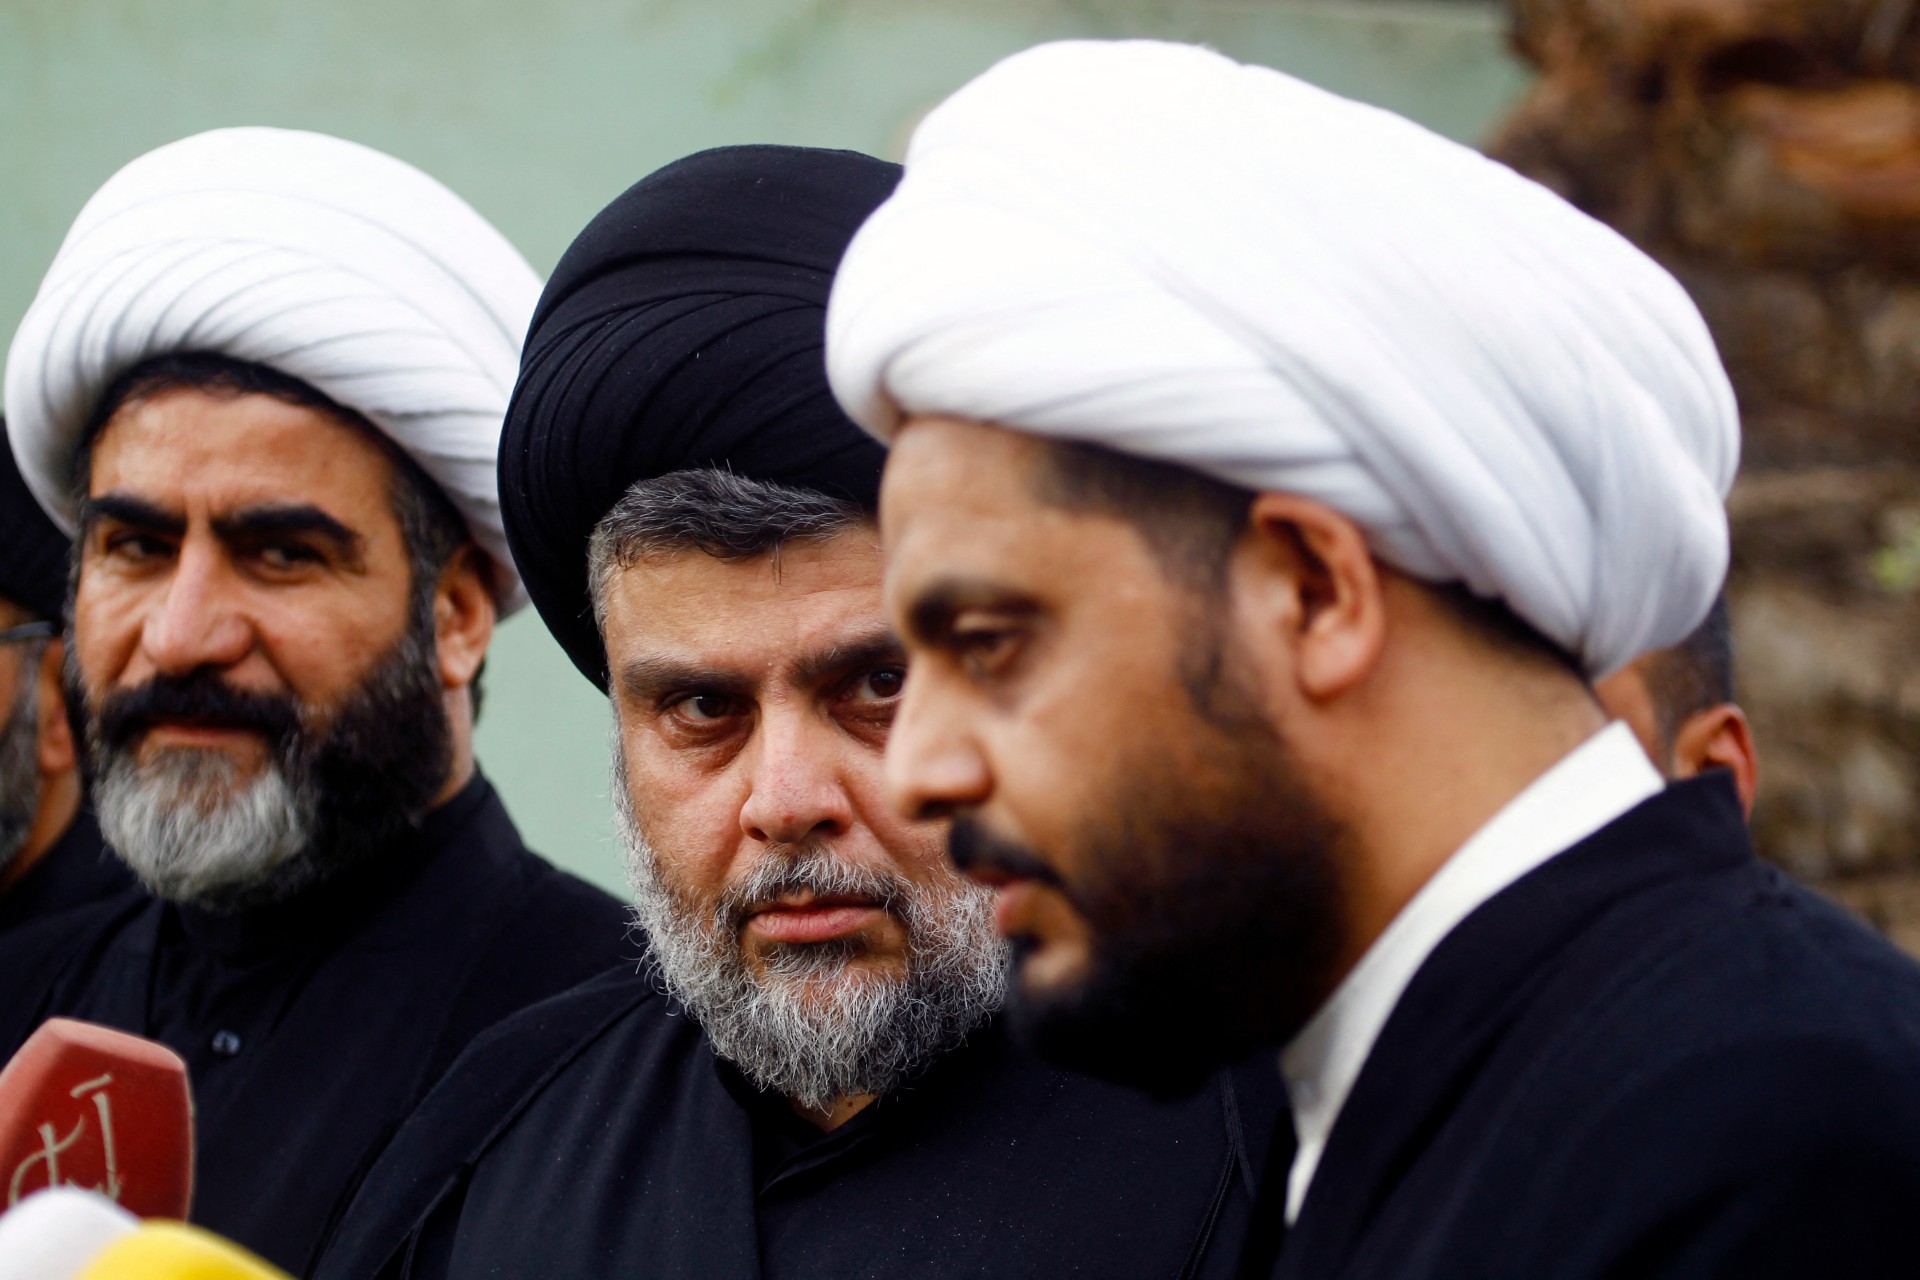 Muqtada al-Sadr (C) listens to Qais al-Khazali (R) during a joint press conference in 2016 (AFP)